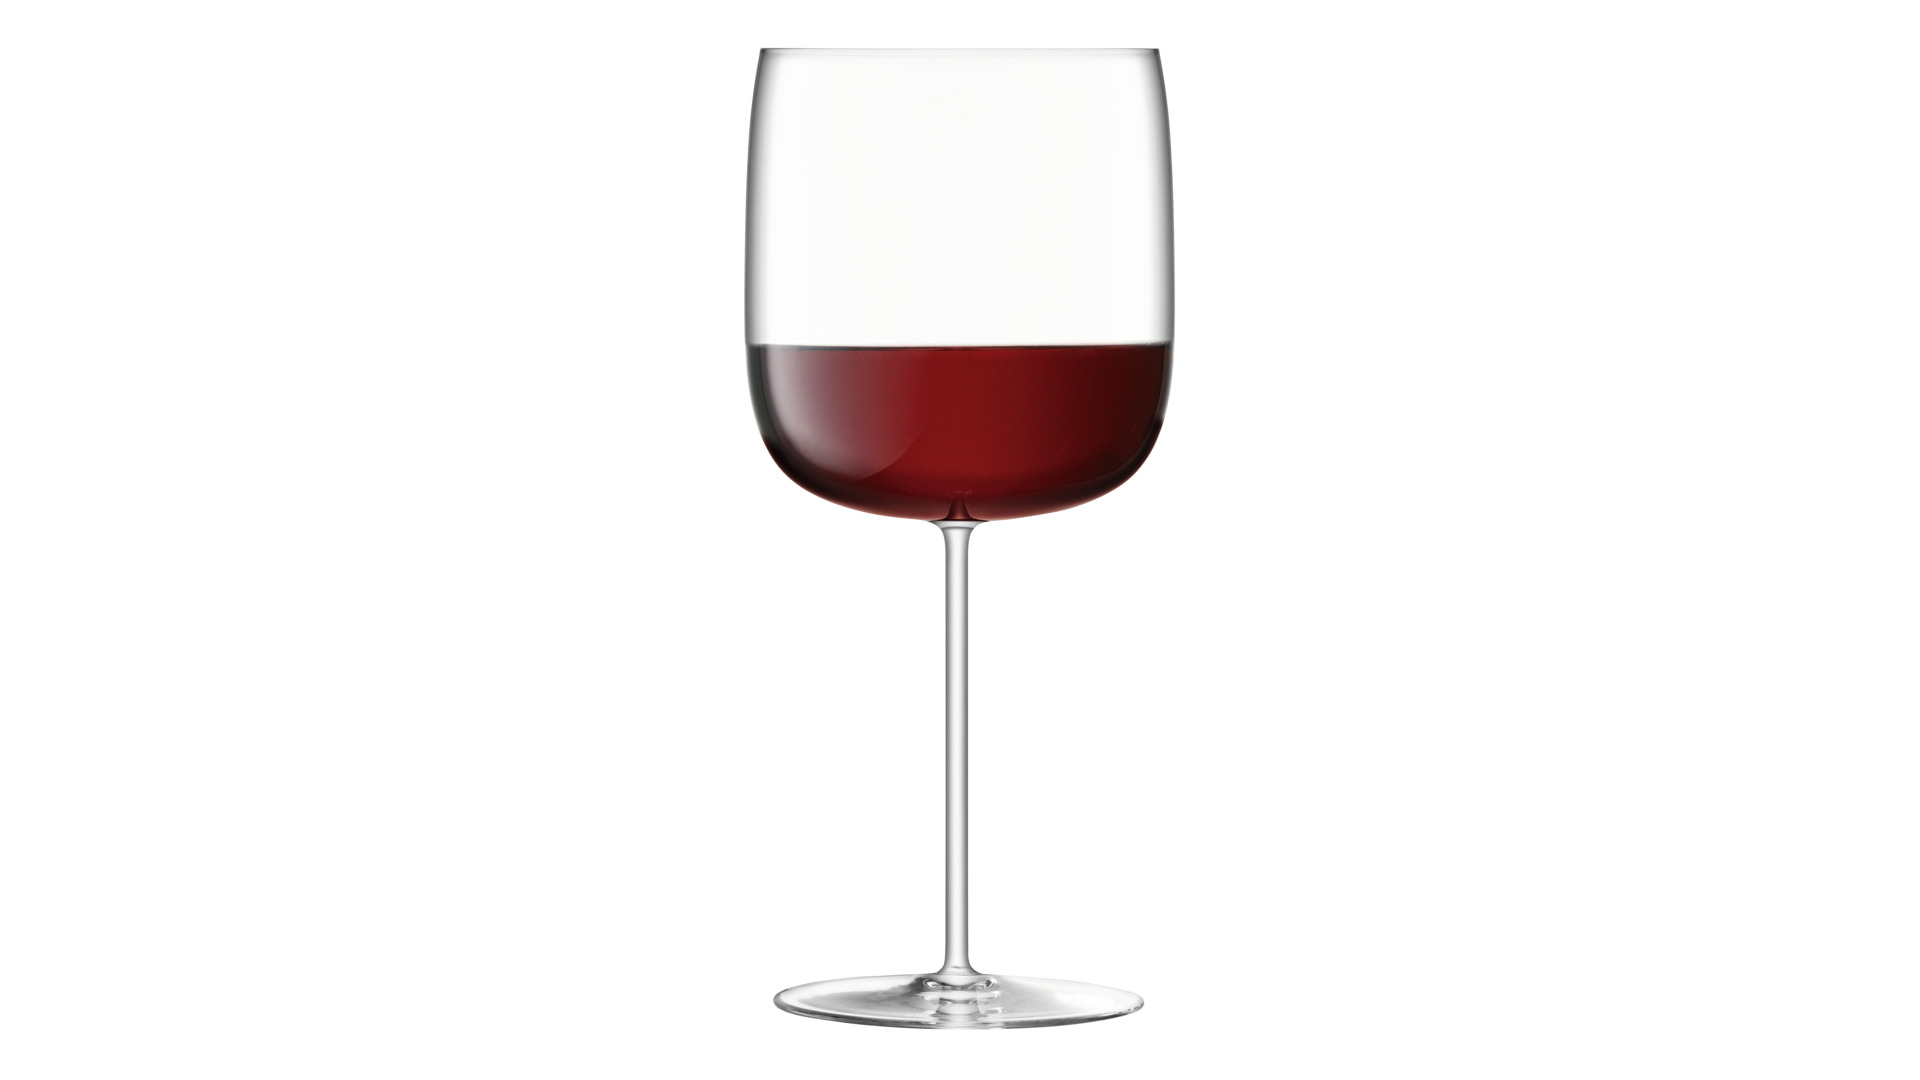 Набор бокалов для вина LSA International Borough 660 мл, 4 шт, стекло